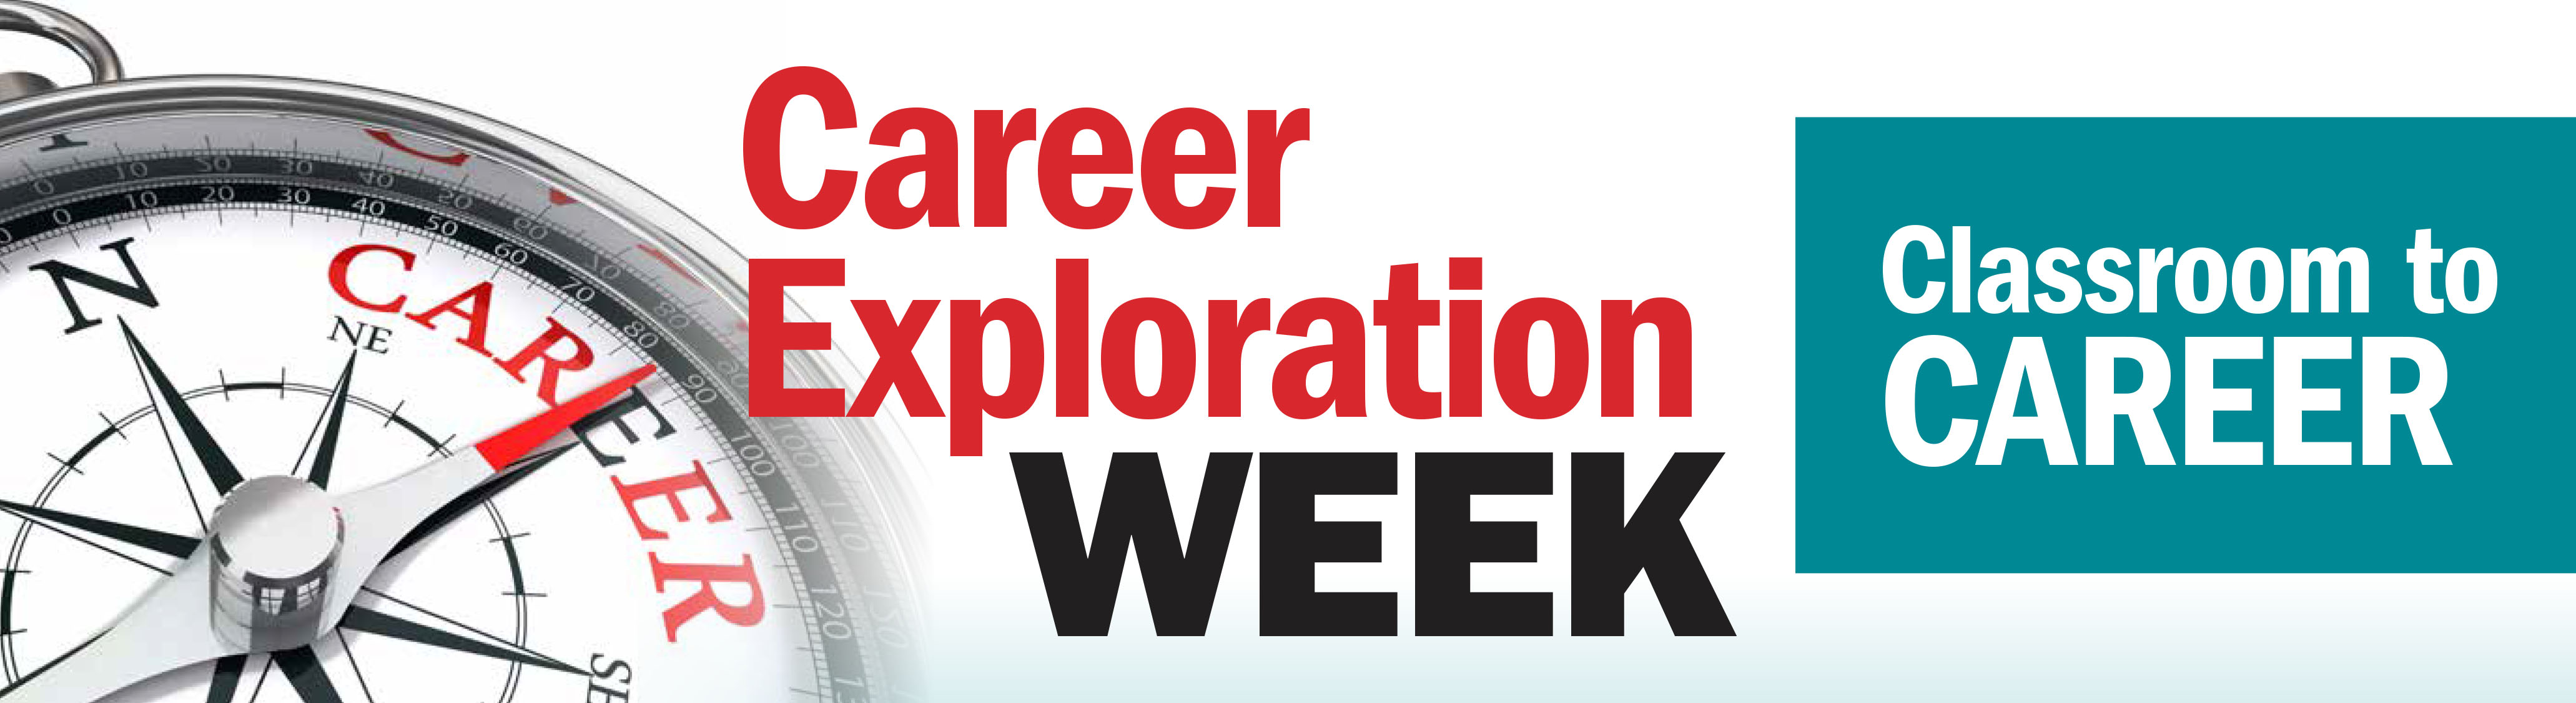 Career exploration week, classroom to career